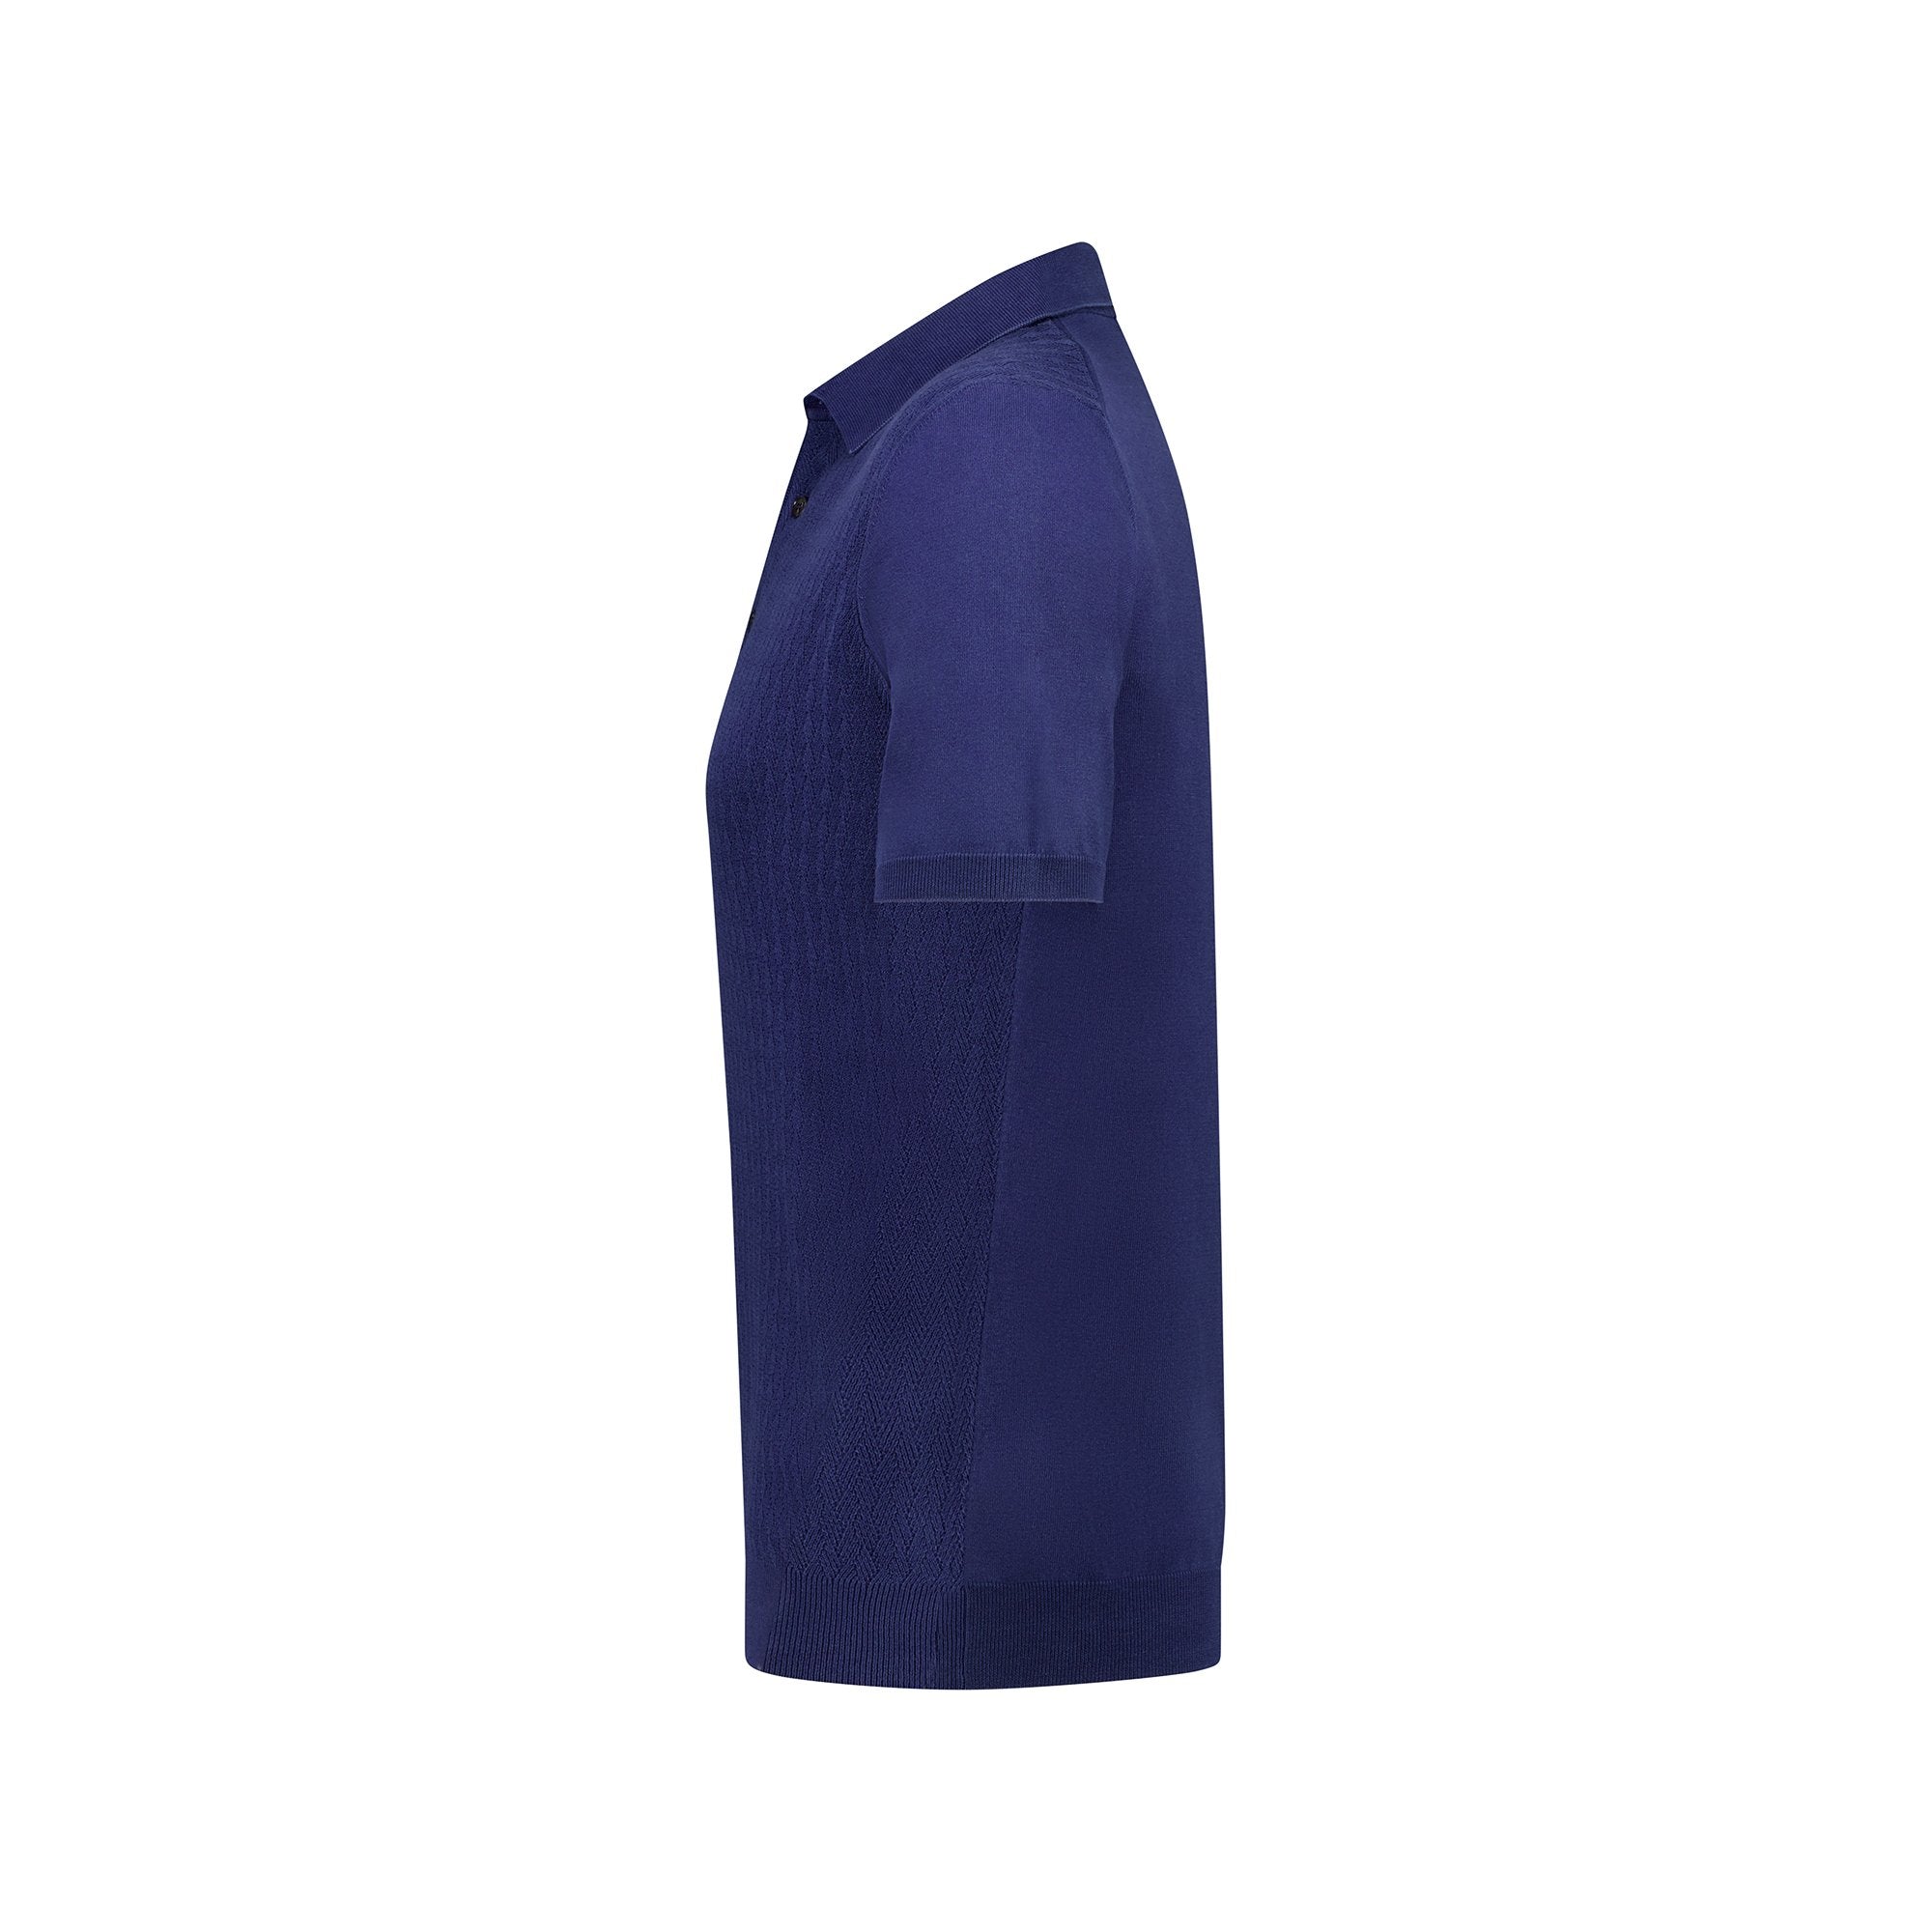 MCKINNON x FERRANTE Short Sleeve Polo in NAVY - Henry BucksShirts38SS230077 - NAVY - 50